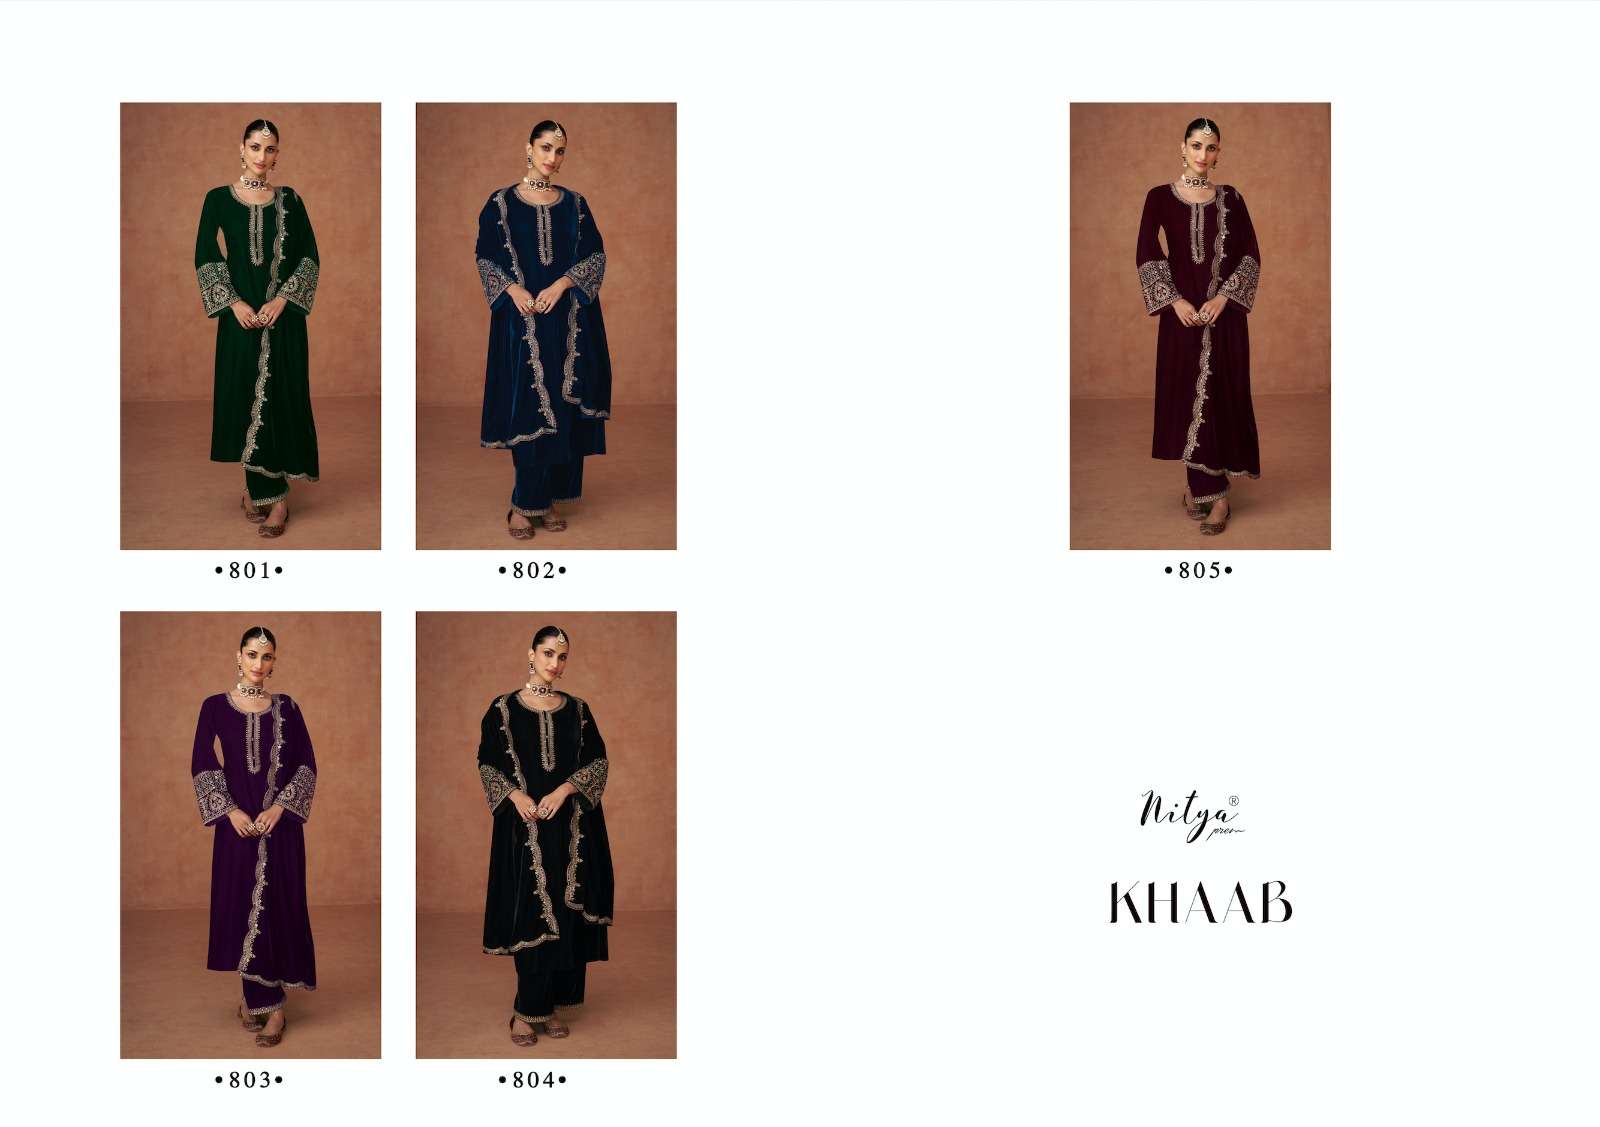 lt nitya khaab 801-805 series designer pakistani salwar kameez wholesaler surat gujarat